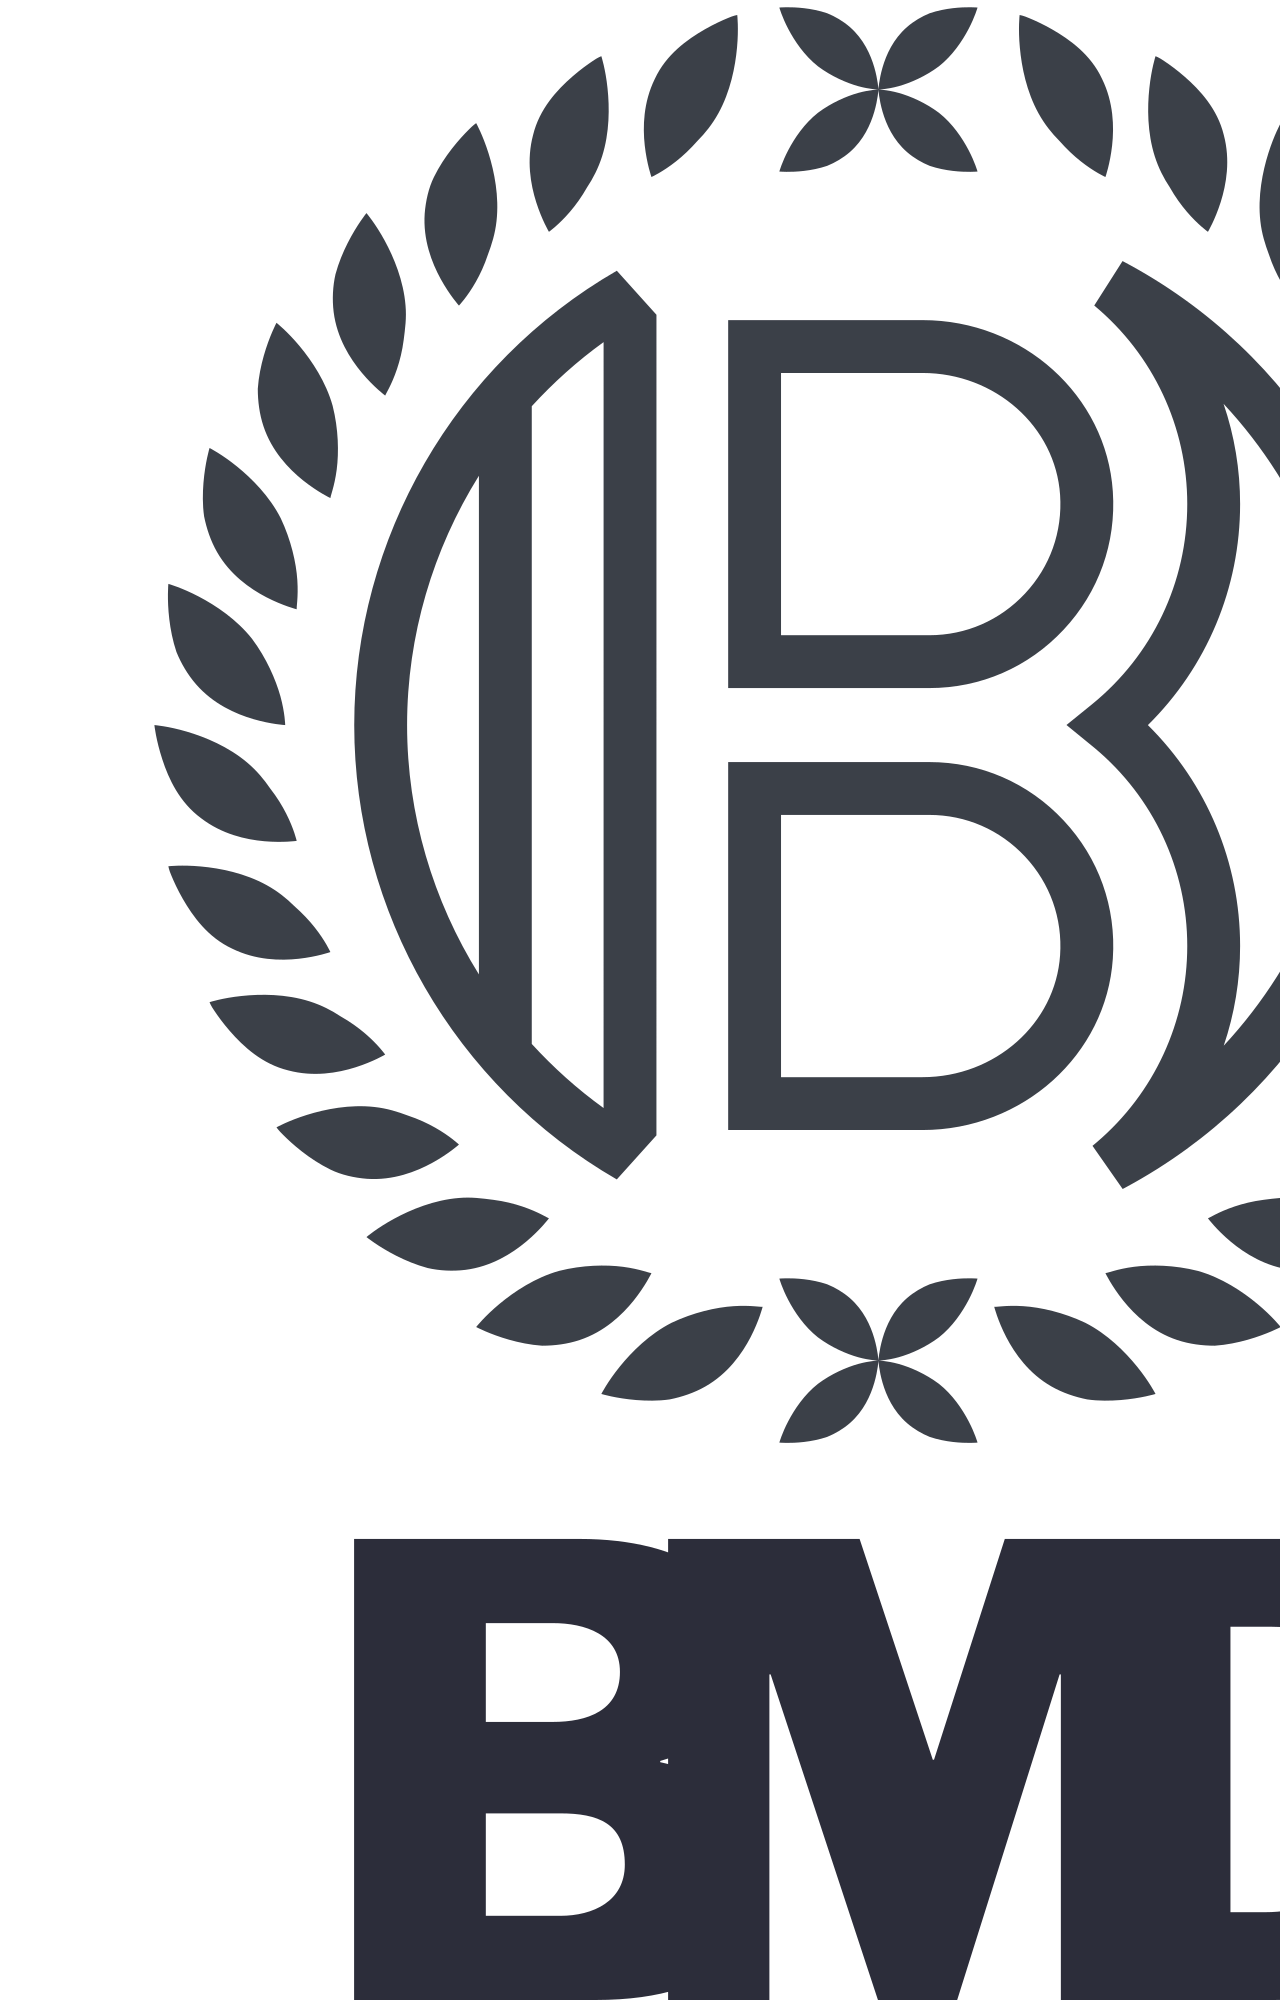 Bmd's logo